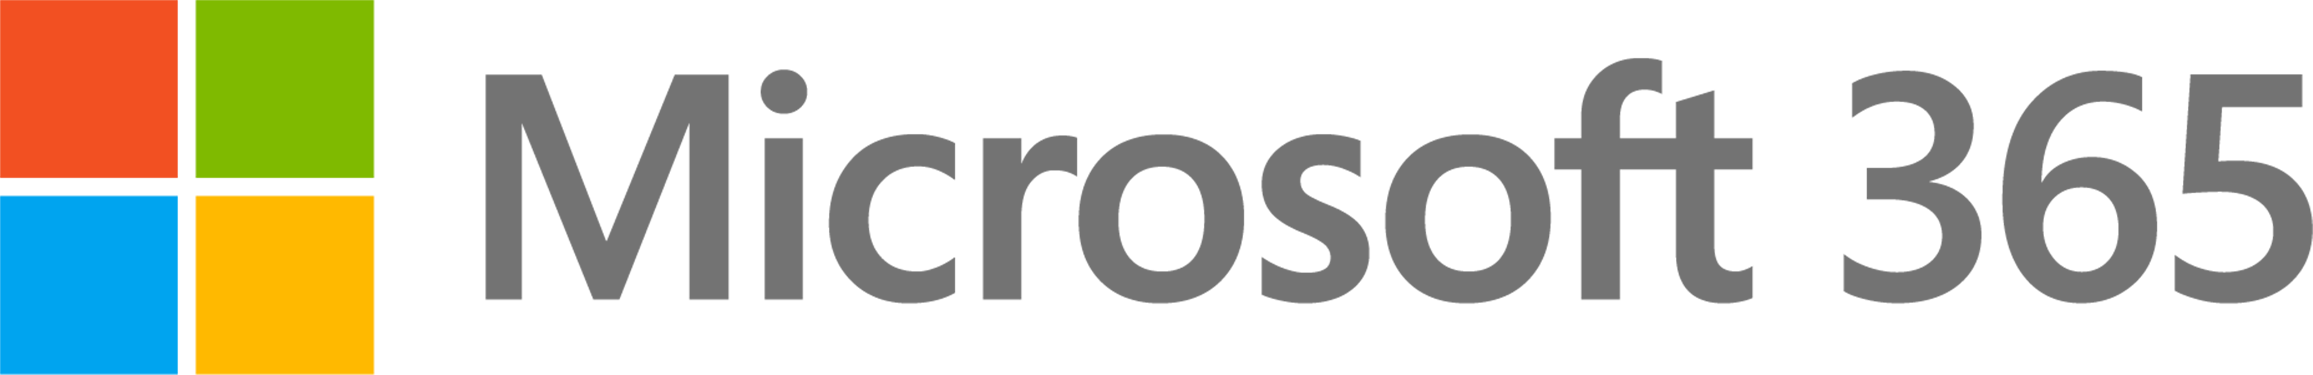 microsoft 365 logo - old